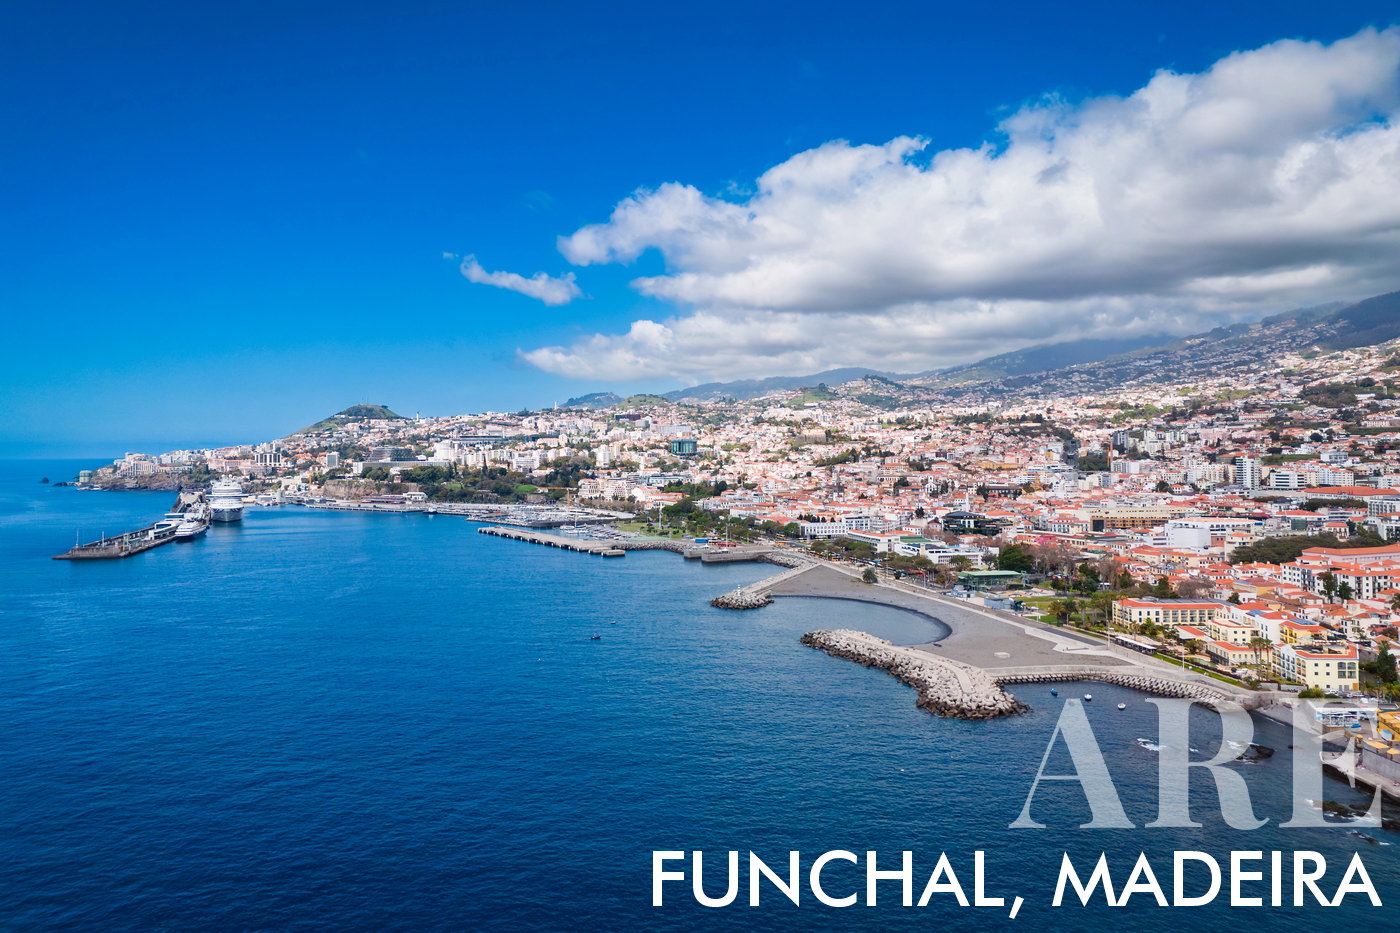 Funchal • Madeira capital city